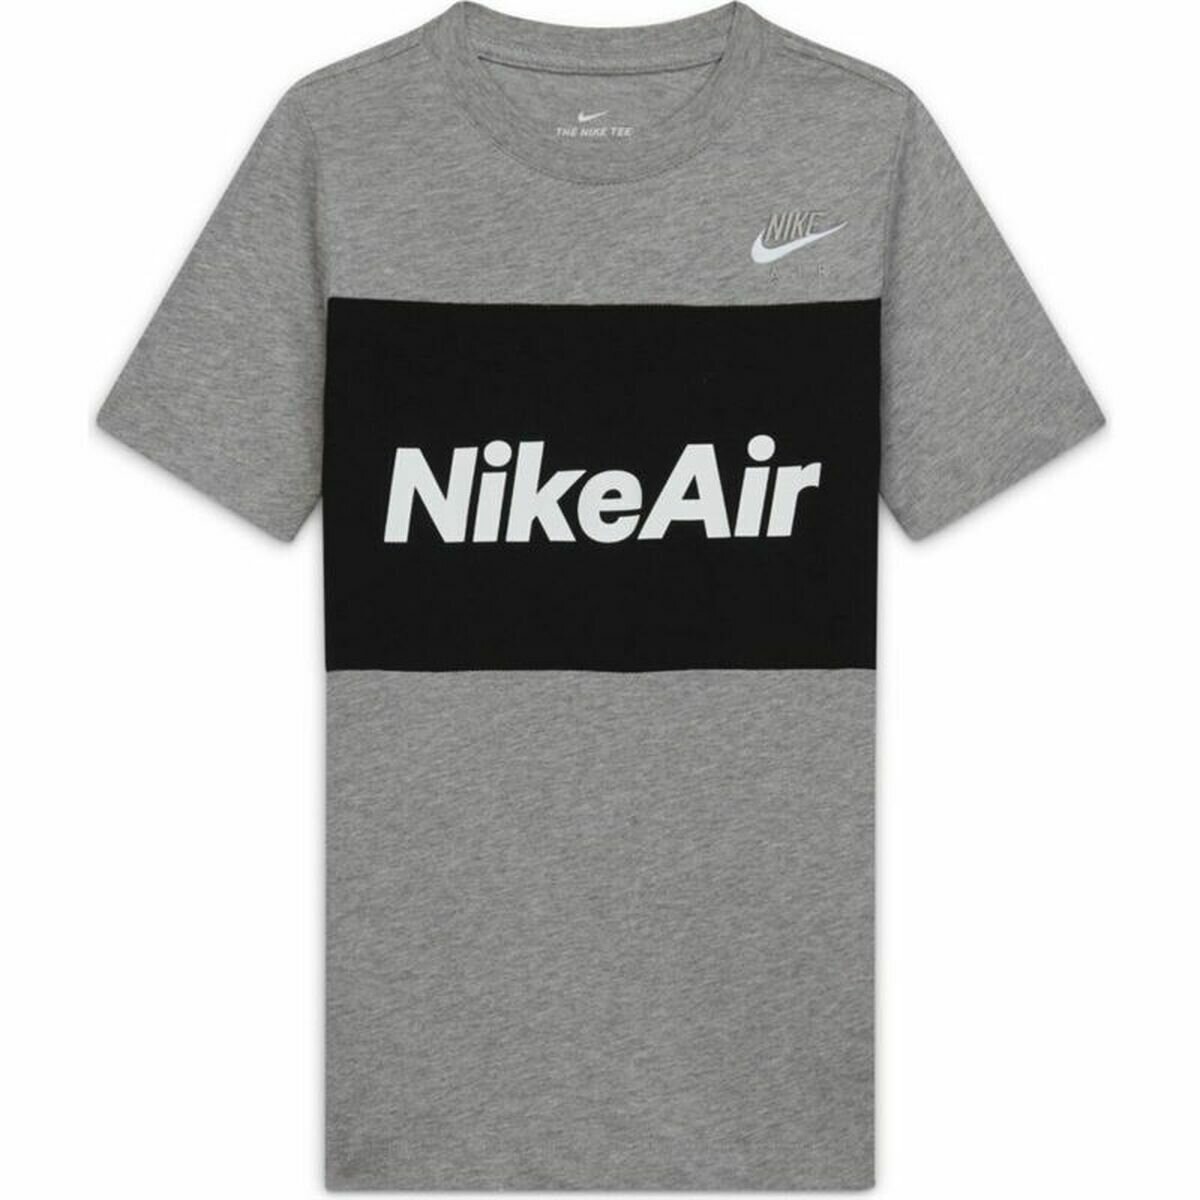 Children's Short Sleeve Nike Air Grey T-Shirt